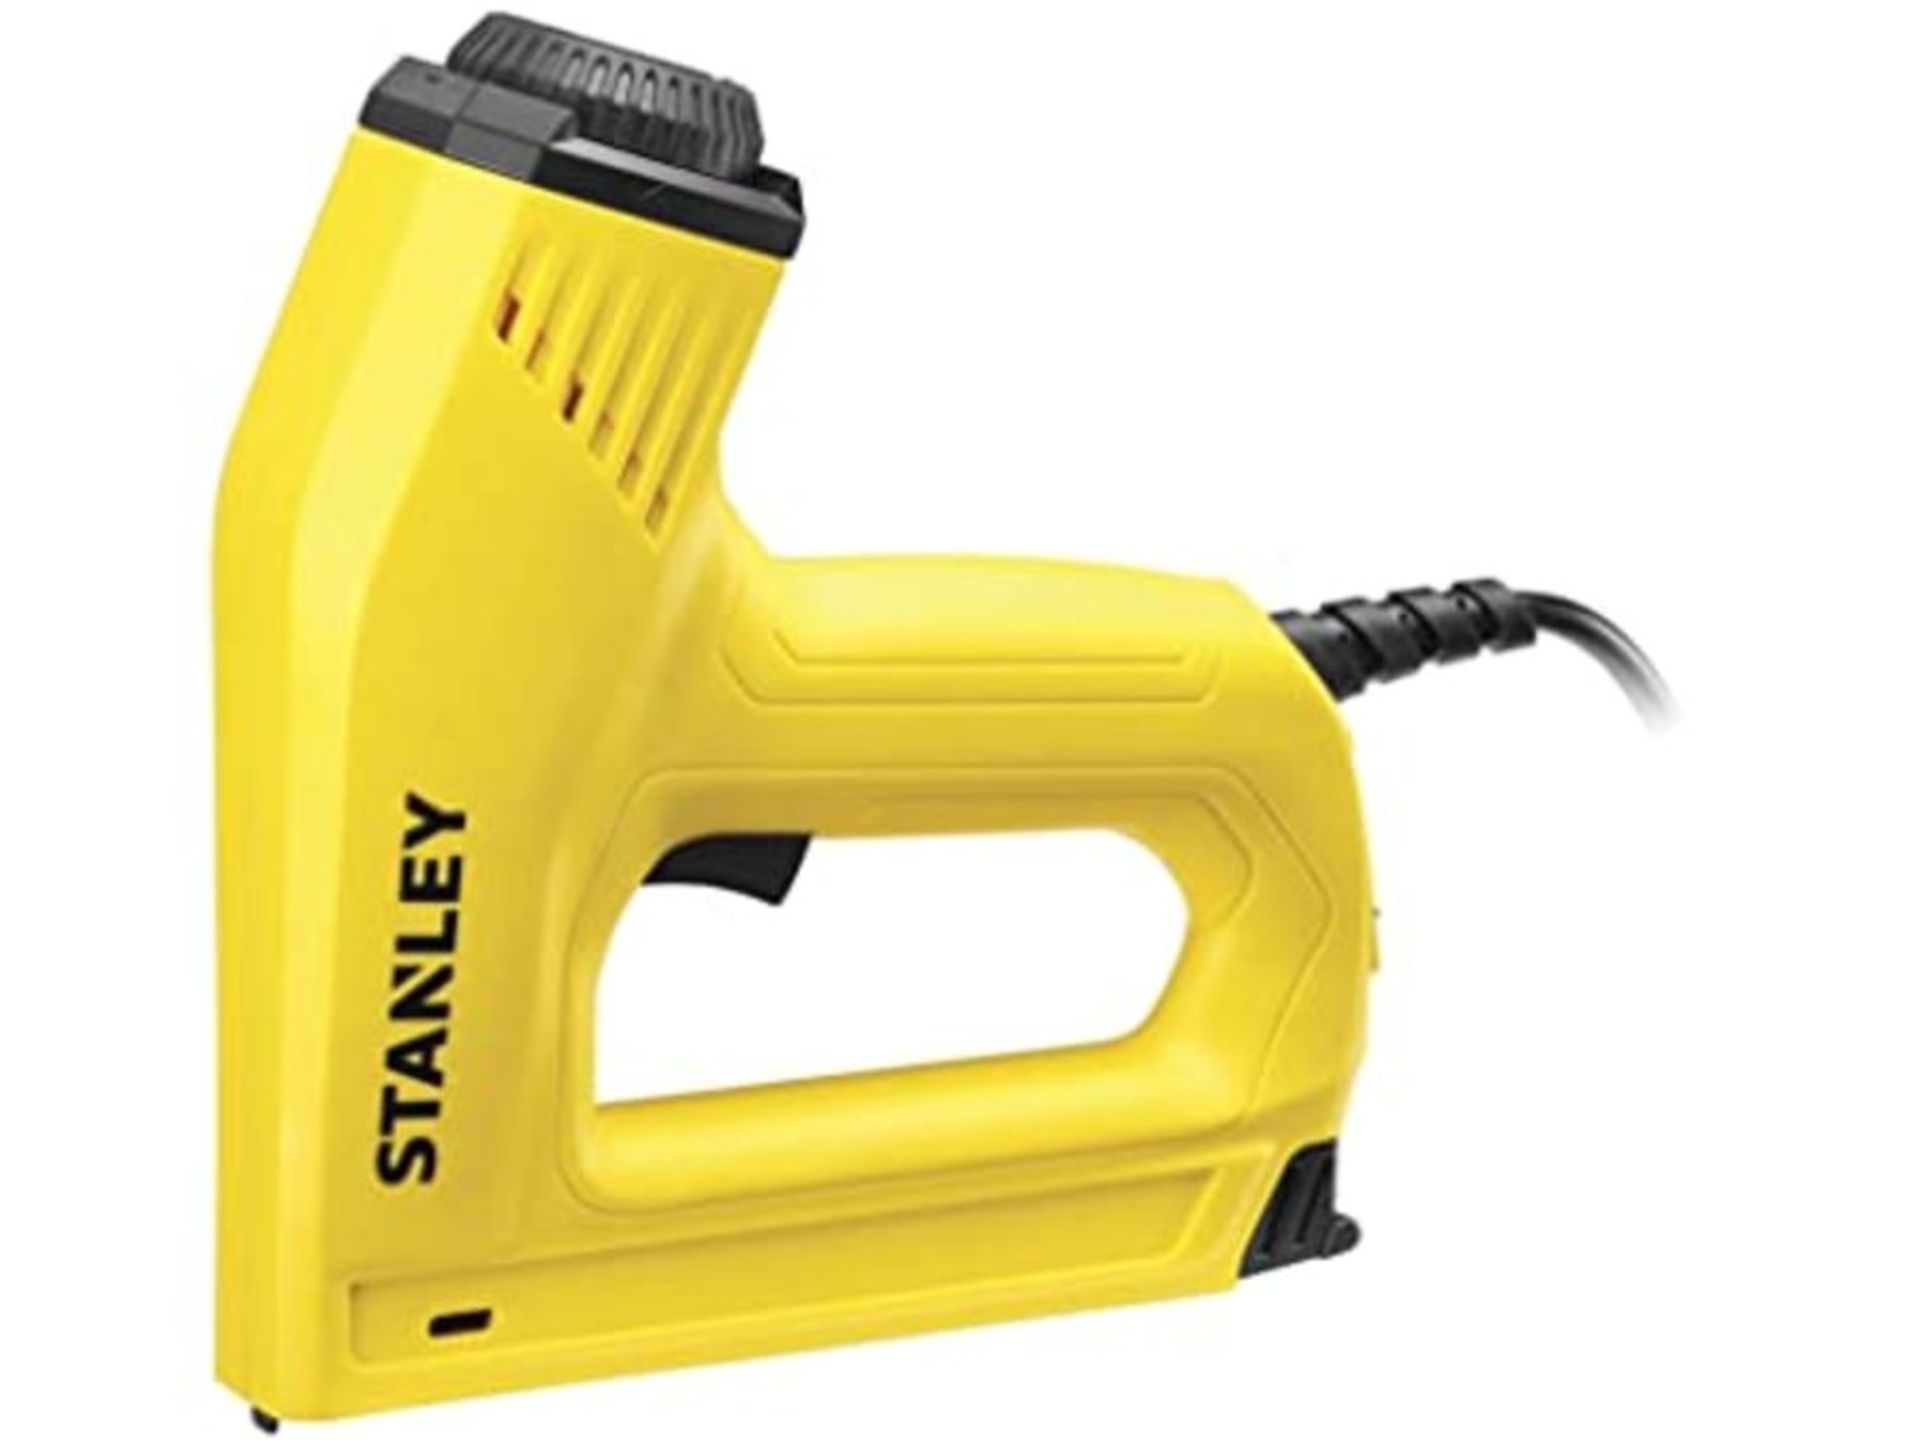 Stanley 0-TRE550 Heavy Duty Electric Staple/Nail Gun, YELLOW